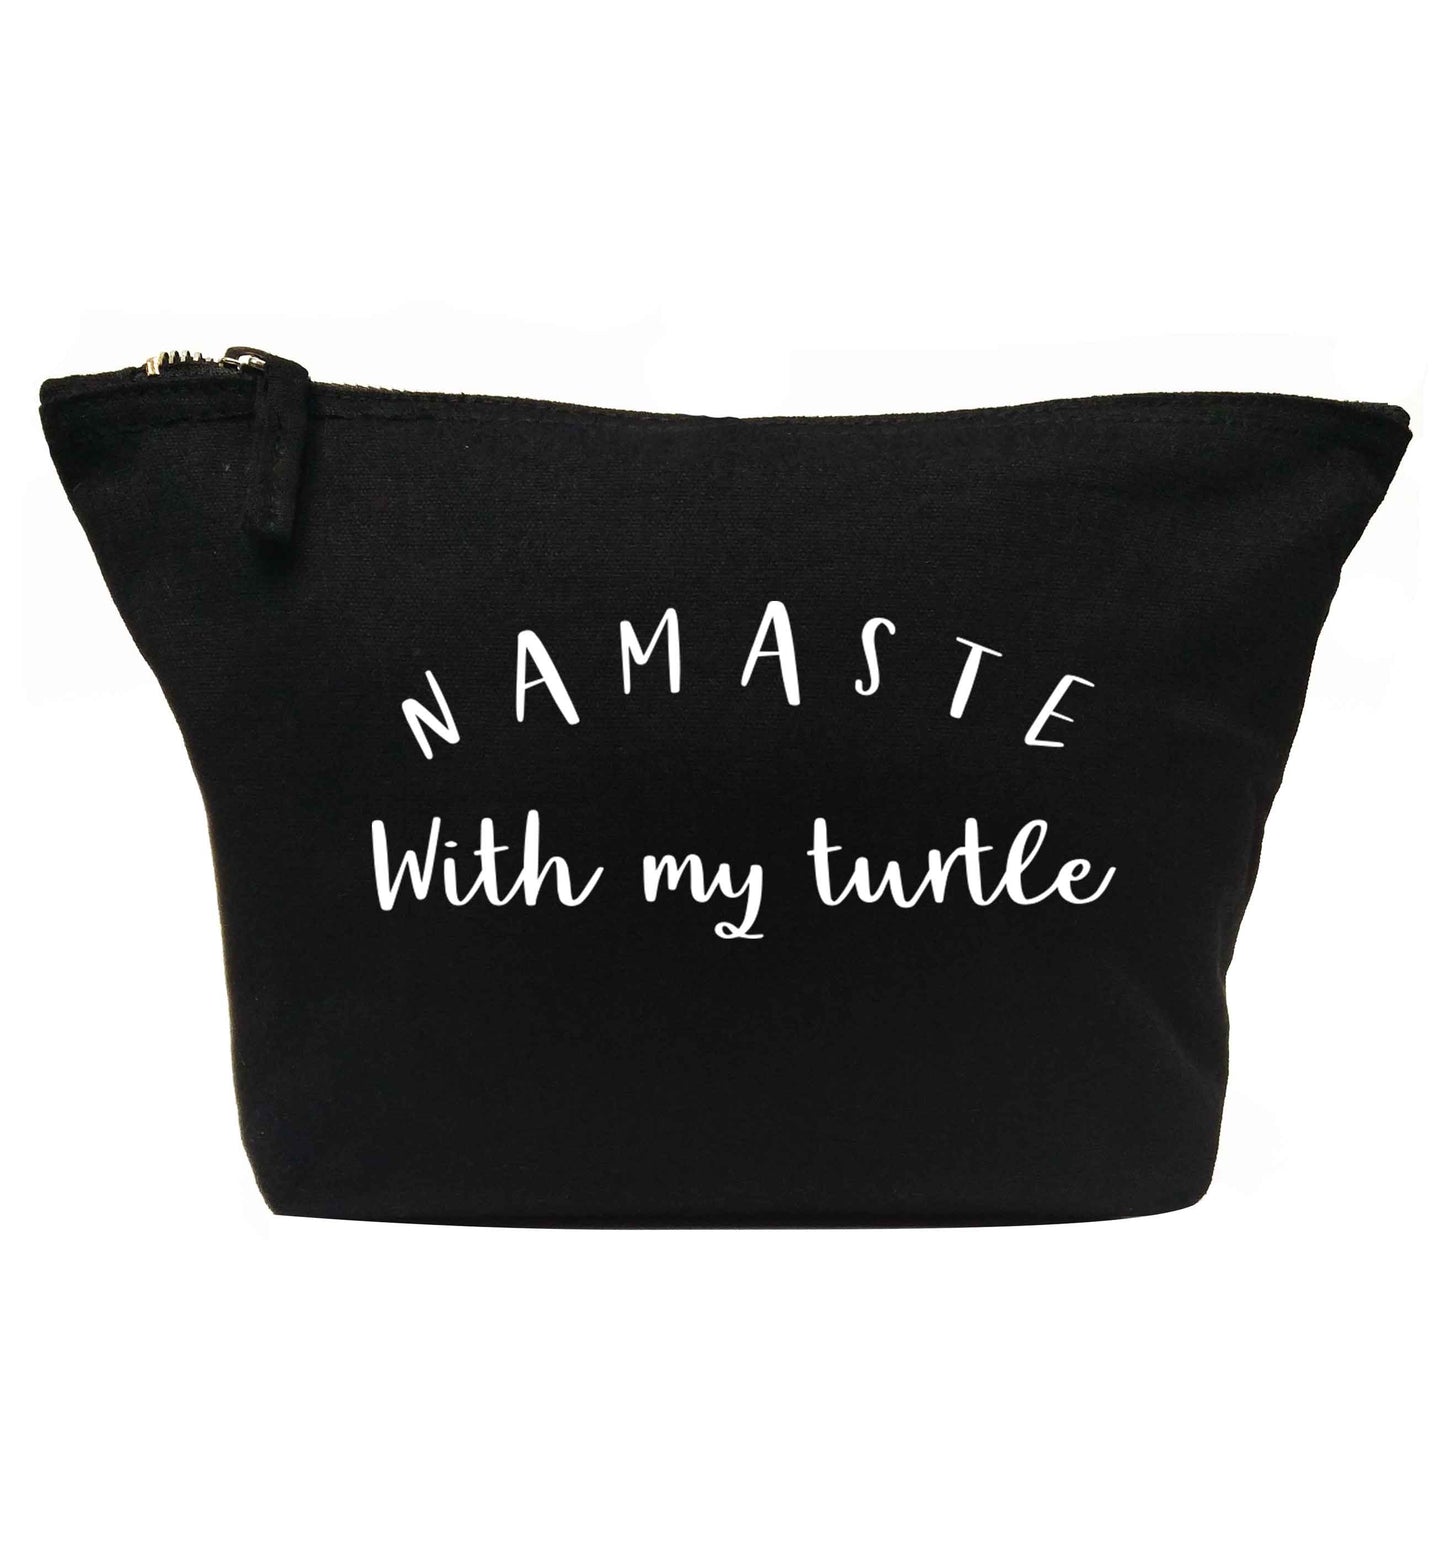 Namaste with my turtle | makeup / wash bag